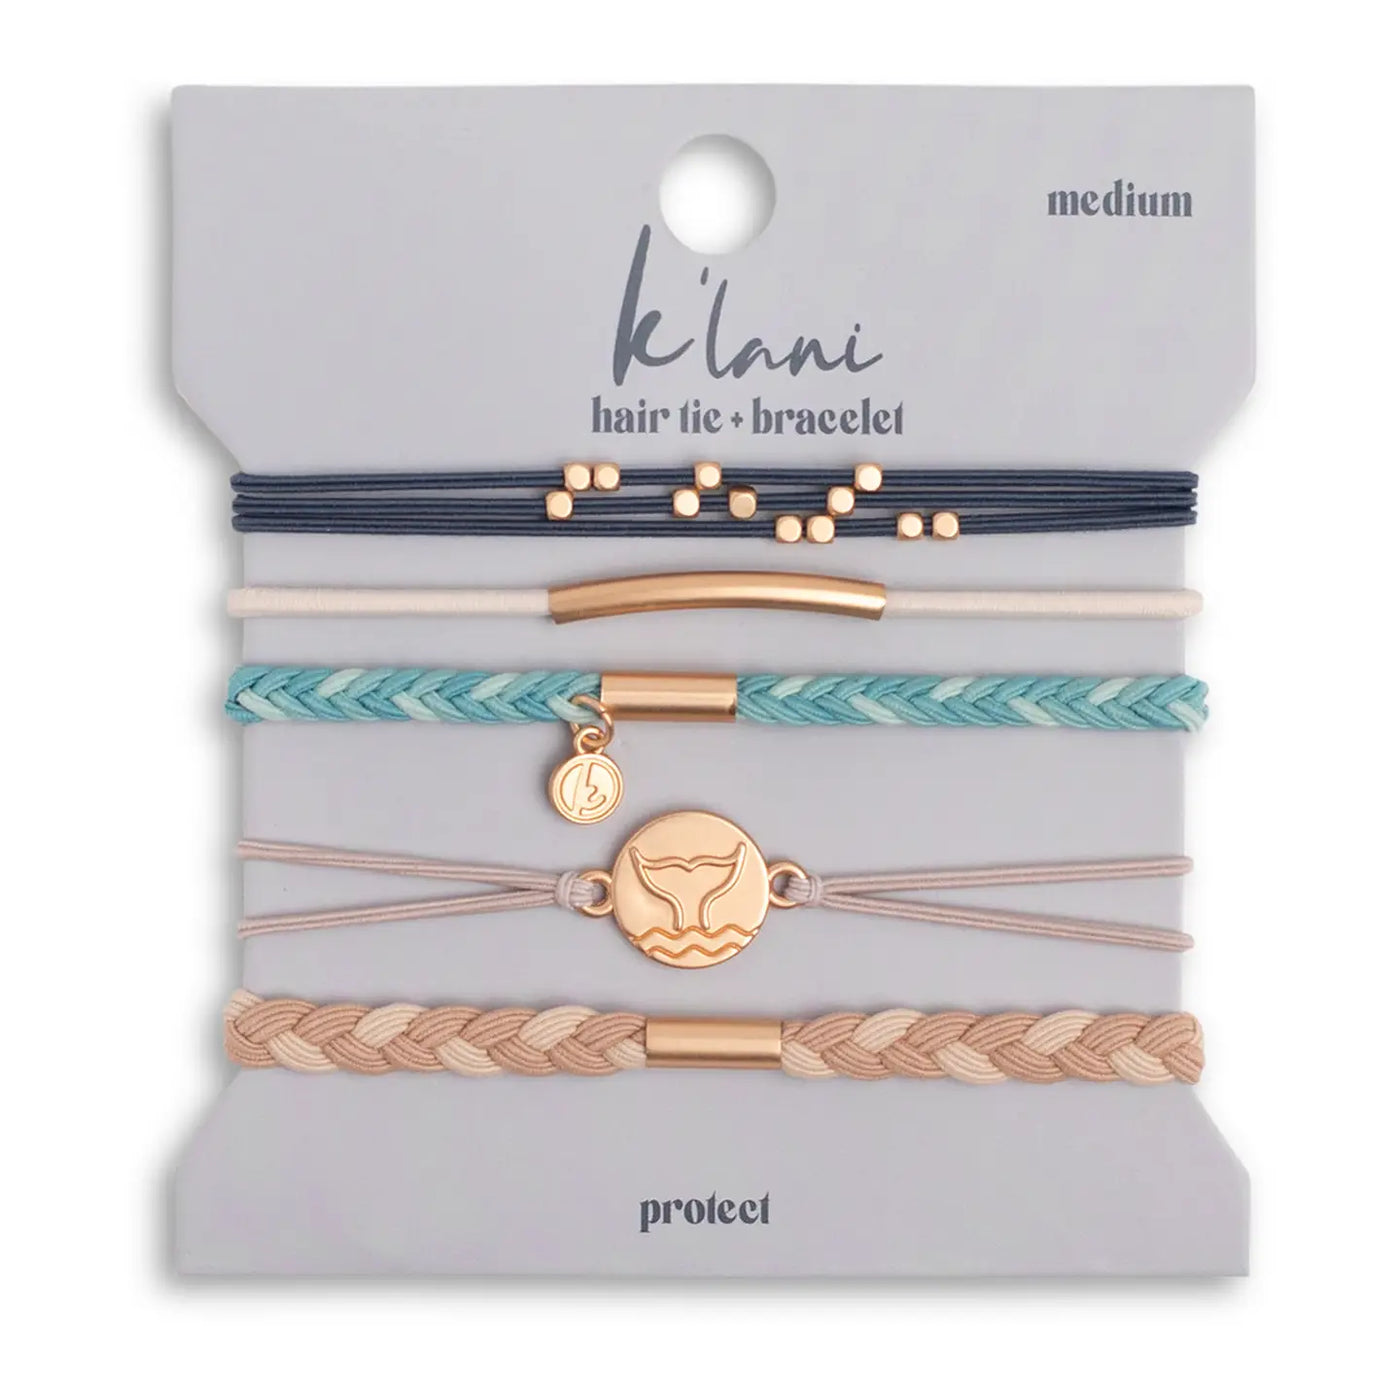 K'Lani Hair Tie Bracelets - Protect